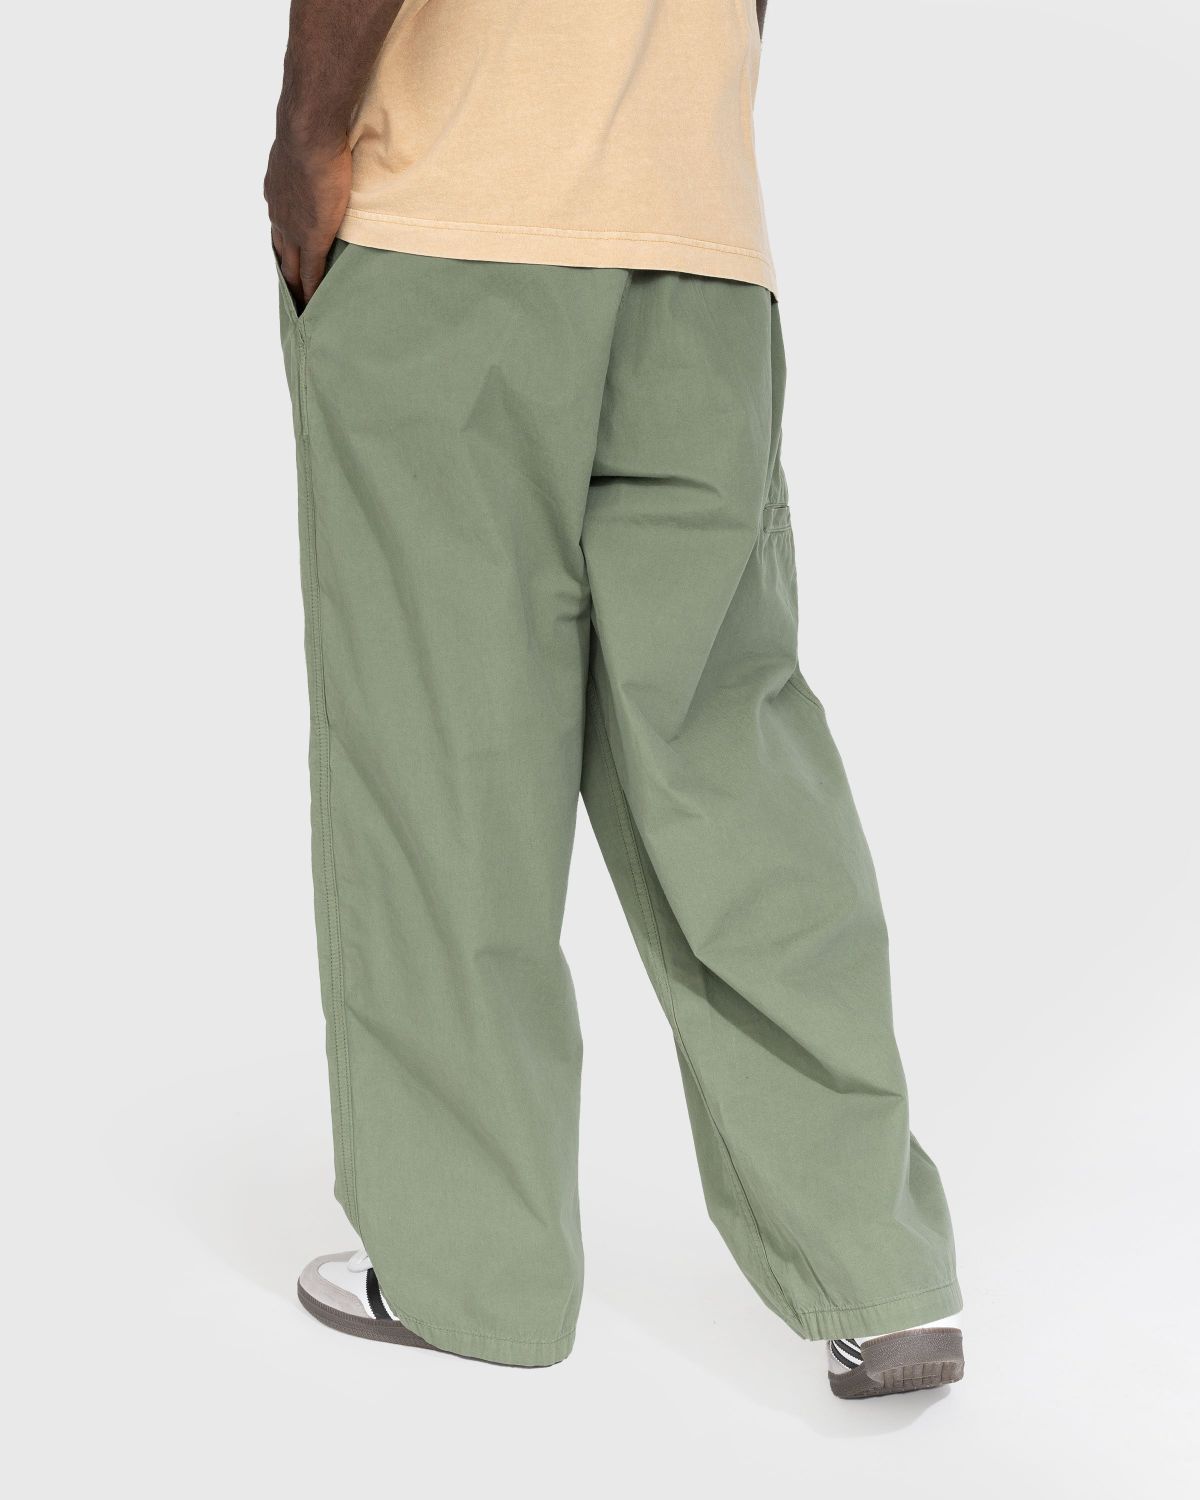 Carhartt WIP – Colston Pant Stonewashed Dollar Green - Pants - Green - Image 3